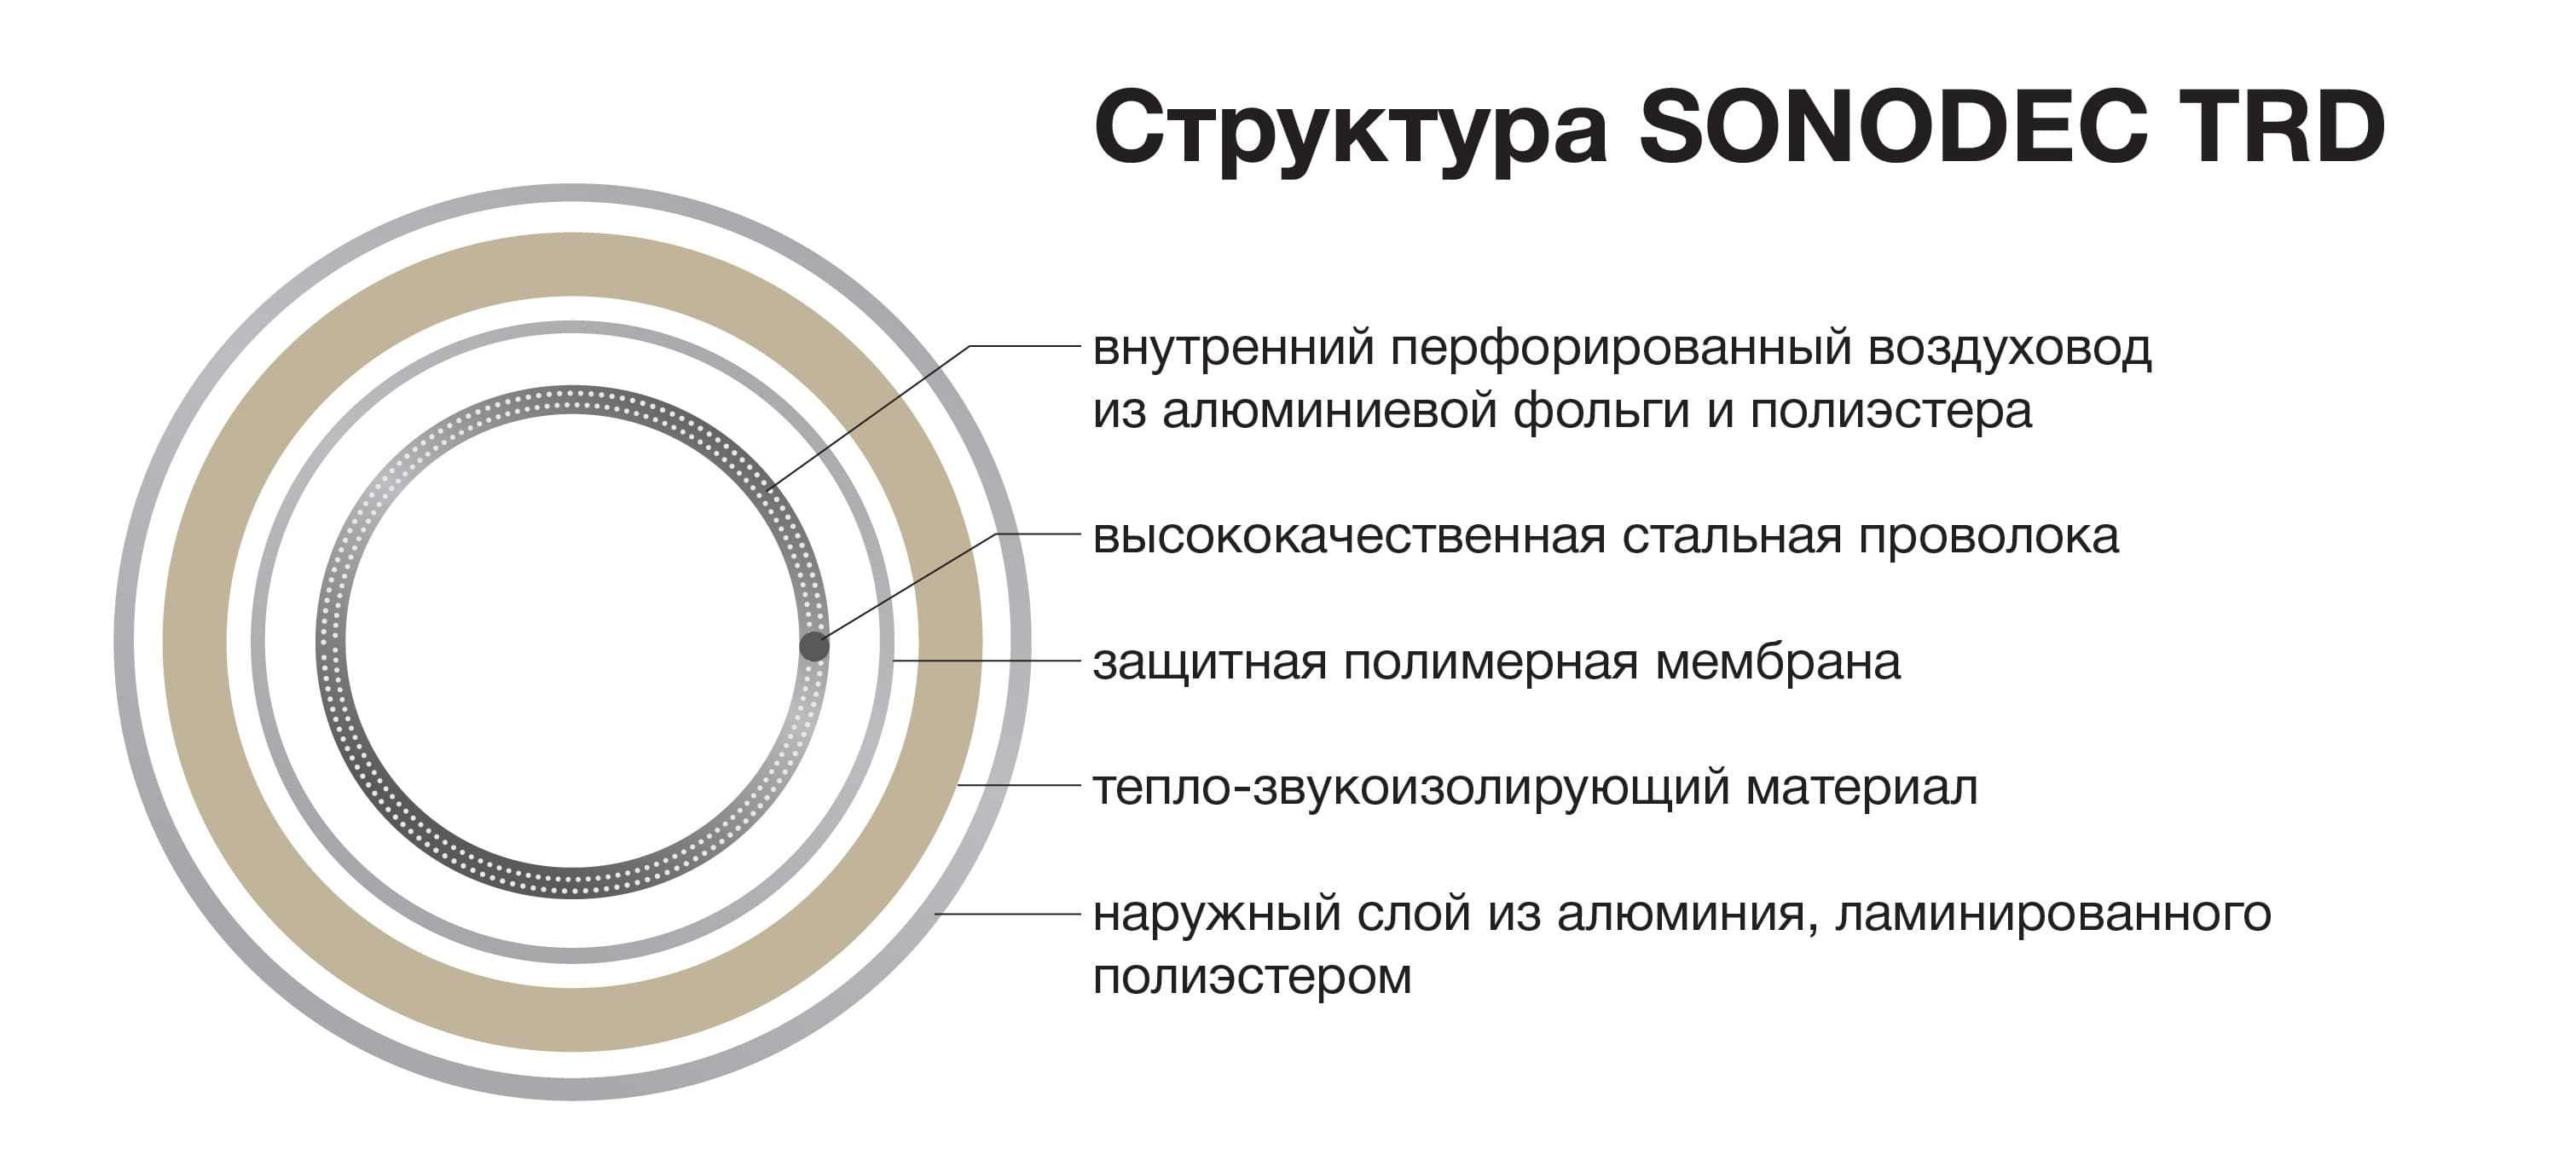 Структура Sonodec TRD